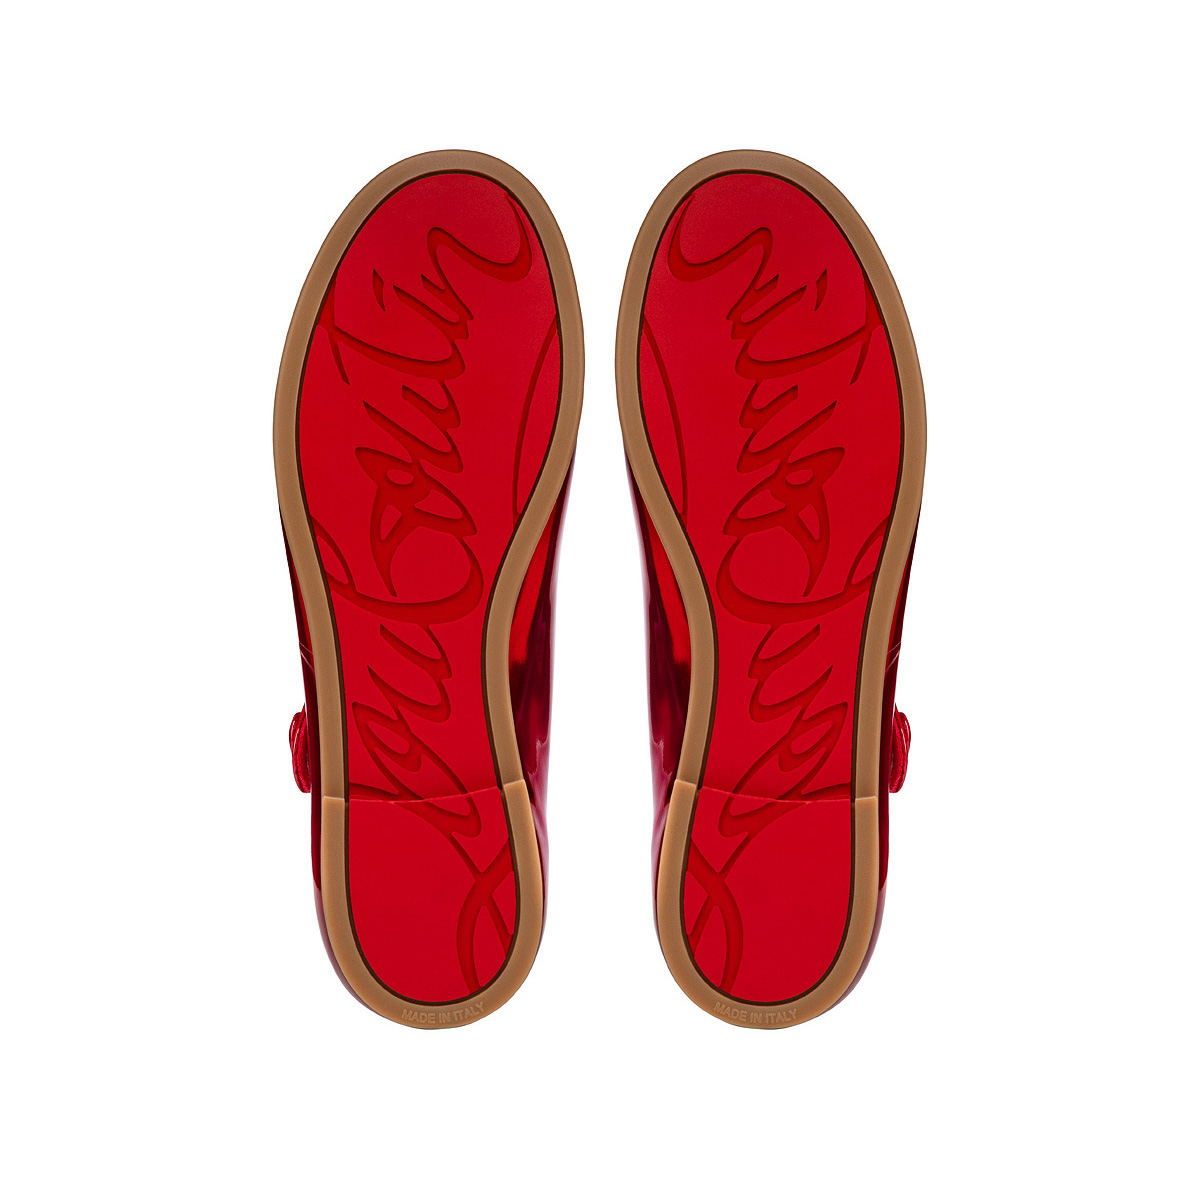 Christian Louboutin heels - متجر النخبة تقليد ماركات ماستر كوبي